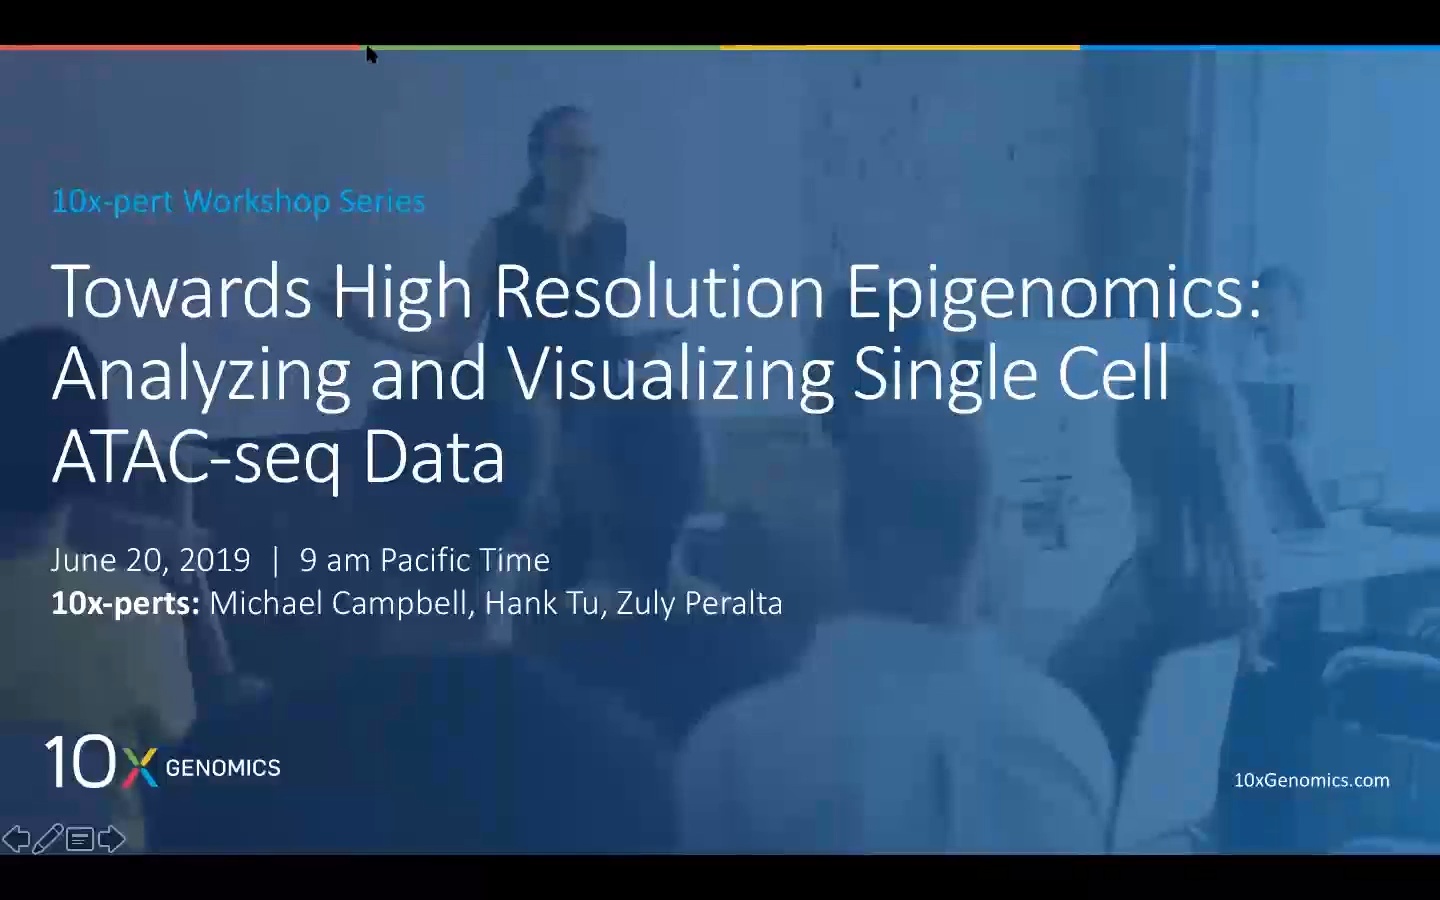 Towards High Resolution Epigenomics – Analyzing and Visualizing Single Cell ATAC-seq Data